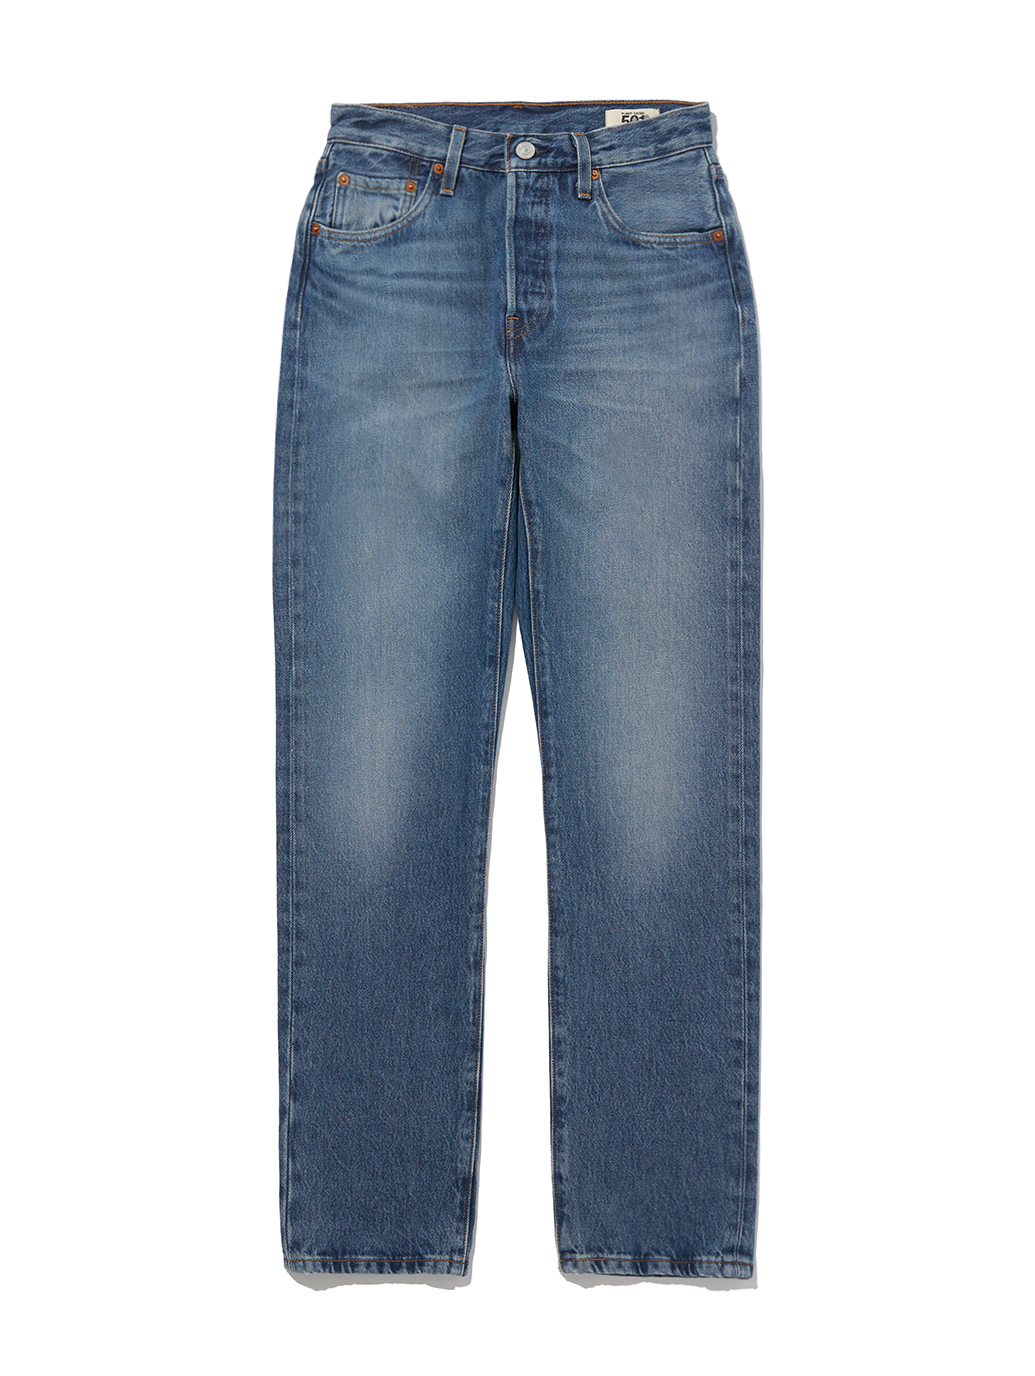 Levi's Plant-Based 501 Jeans >>FUTUREVVORLD